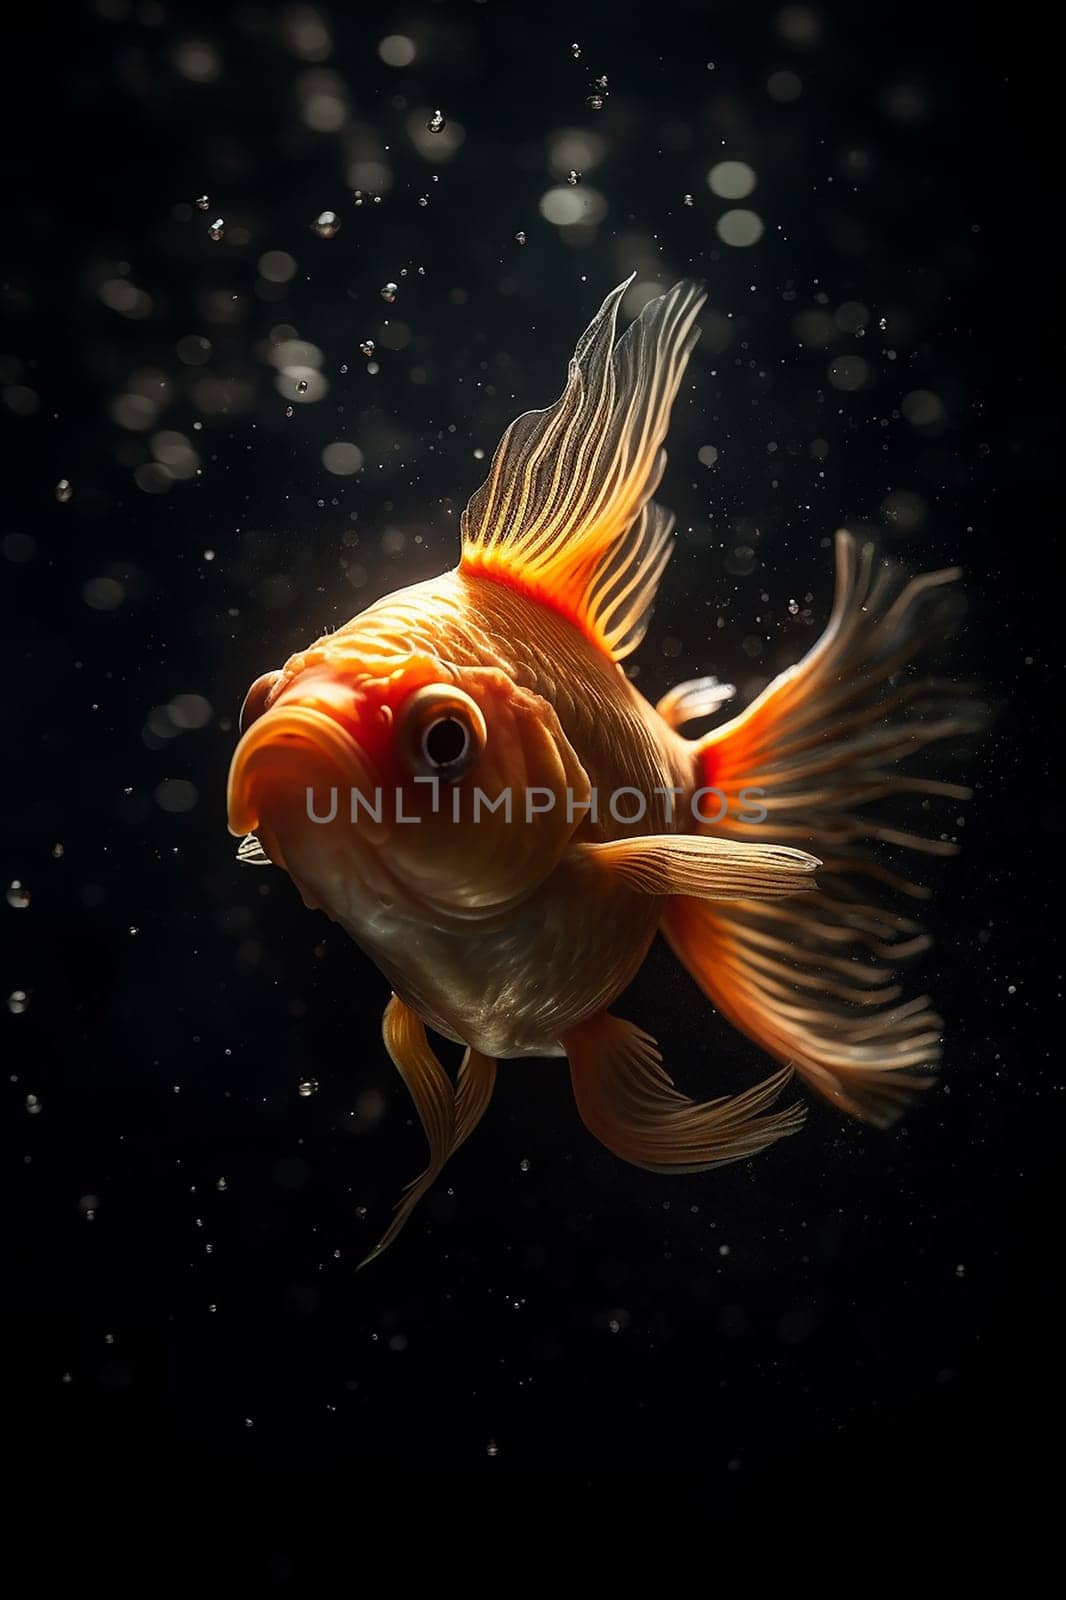 Goldfish swimming gracefully, illuminated with light against a dark backdrop